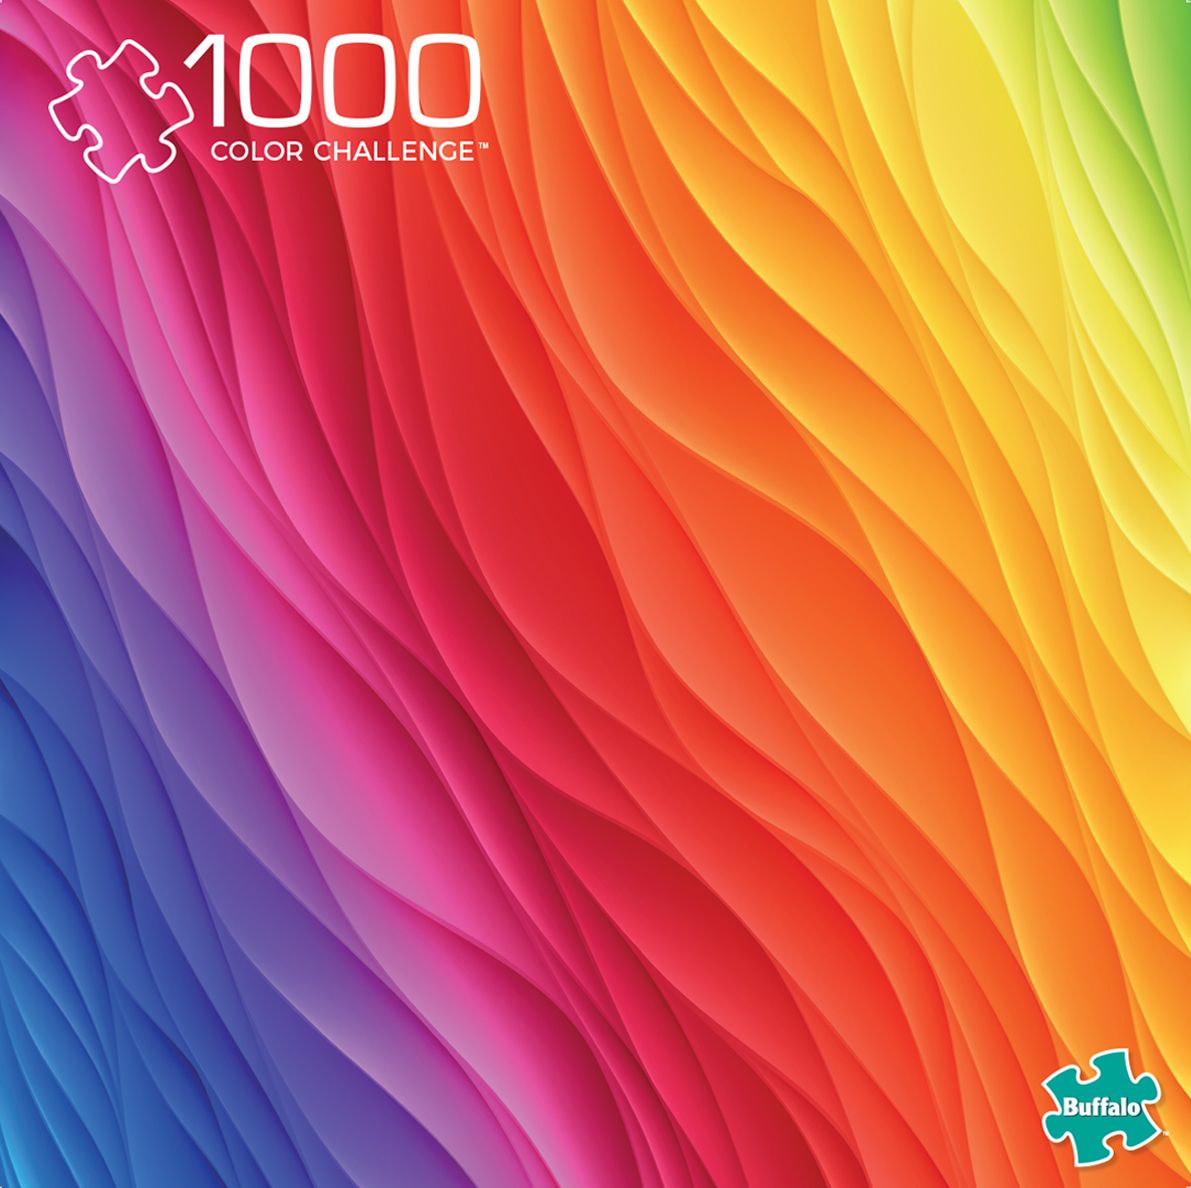 [RDY] [送料無料] Buffalo Games ビビッドコレクション カラーチャレンジ 1000ピース ジグソーパズル [楽天海外通販] | Buffalo Games Vivid Collection Color Challenge 1000 Pieces Jigsaw Puzzle